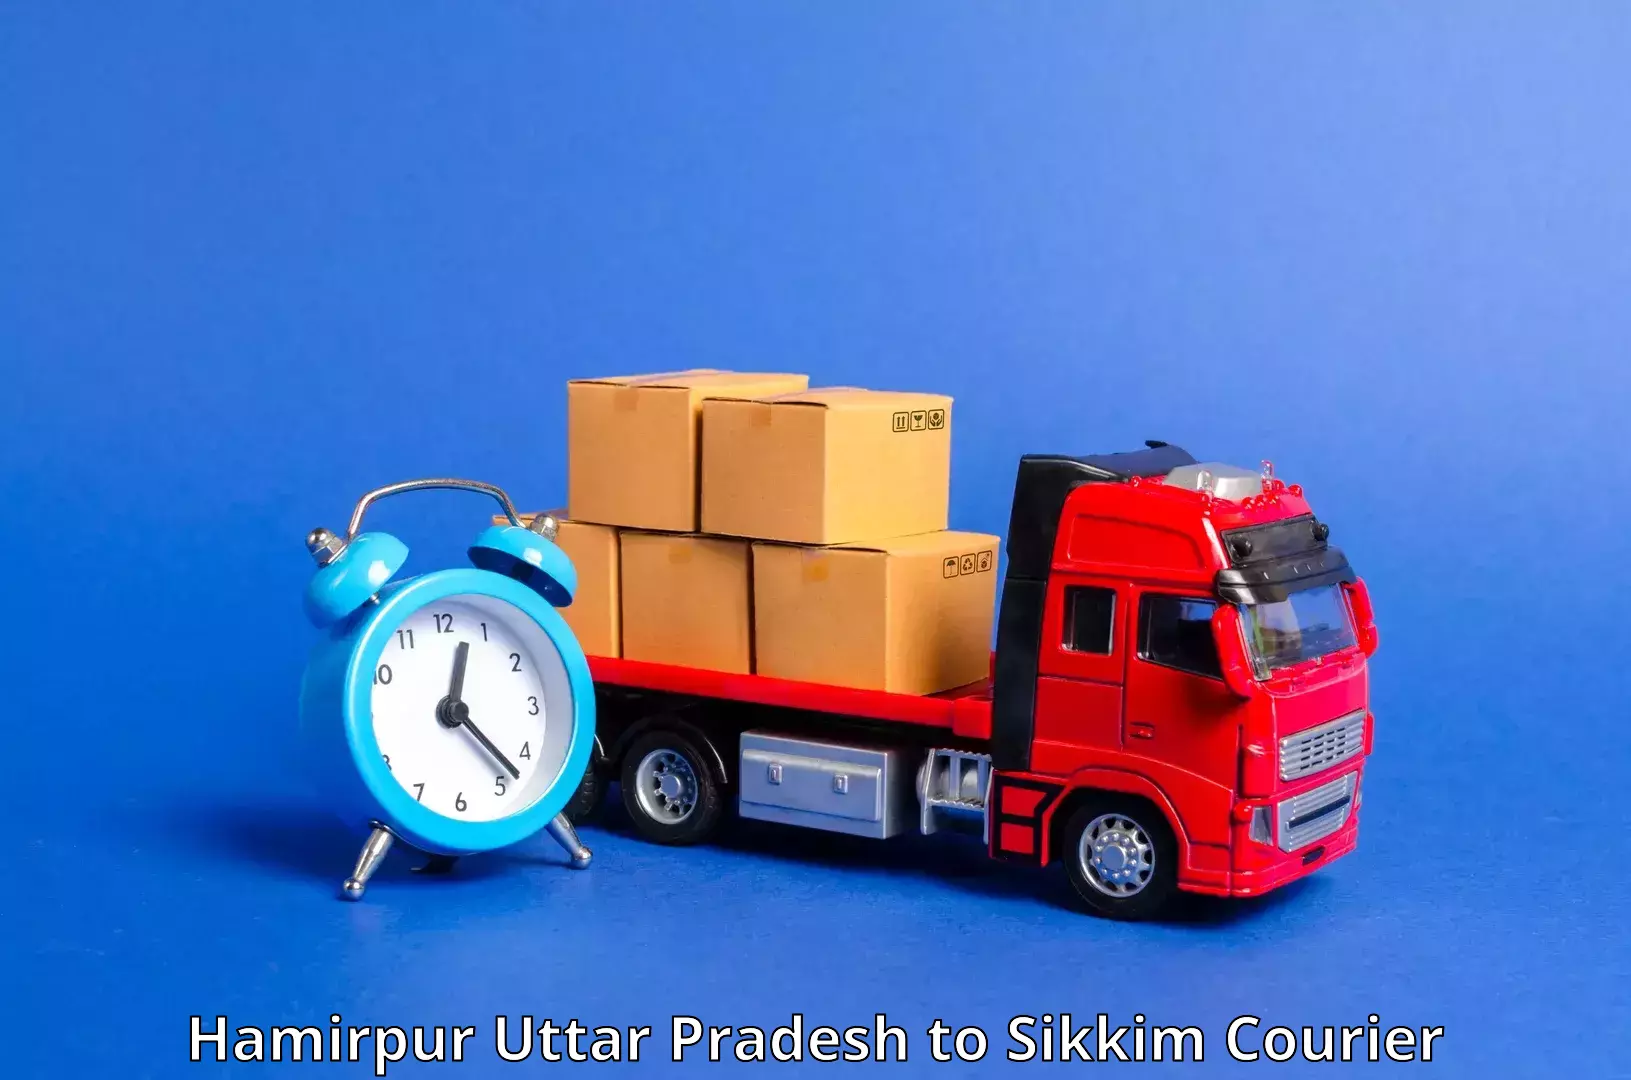 Doorstep delivery service Hamirpur Uttar Pradesh to Mangan